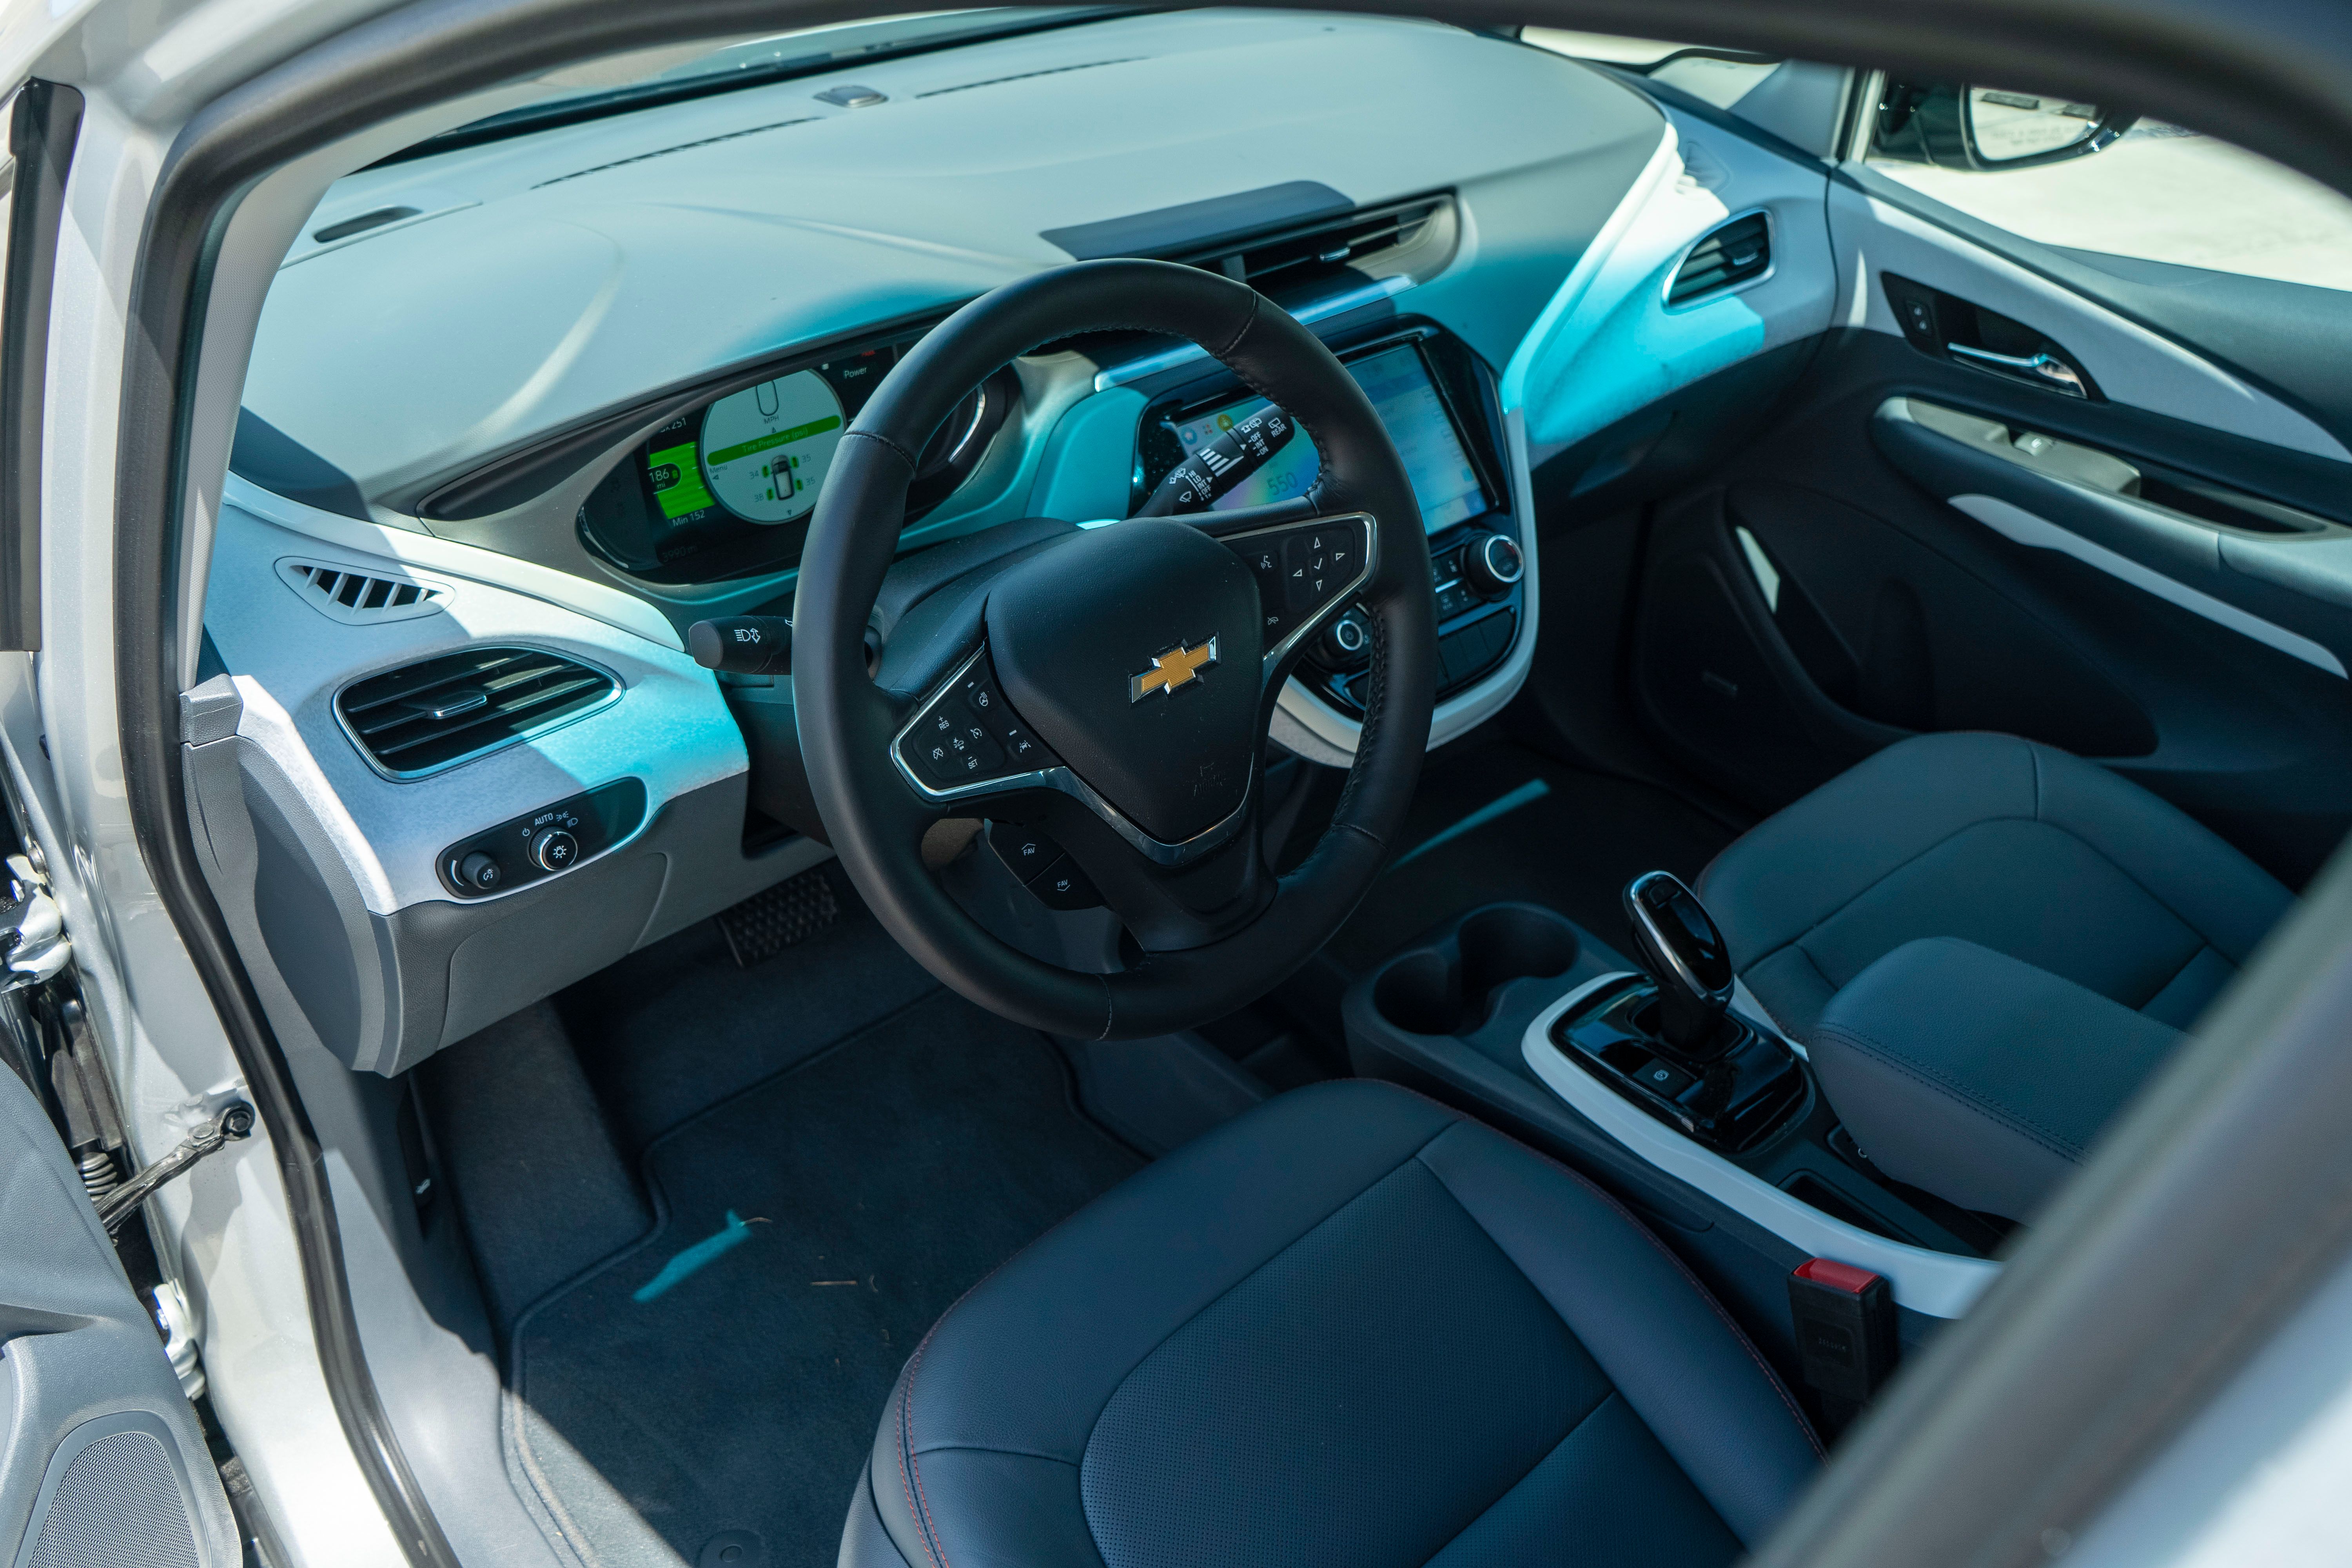 2020 Chevrolet Bolt - Driven